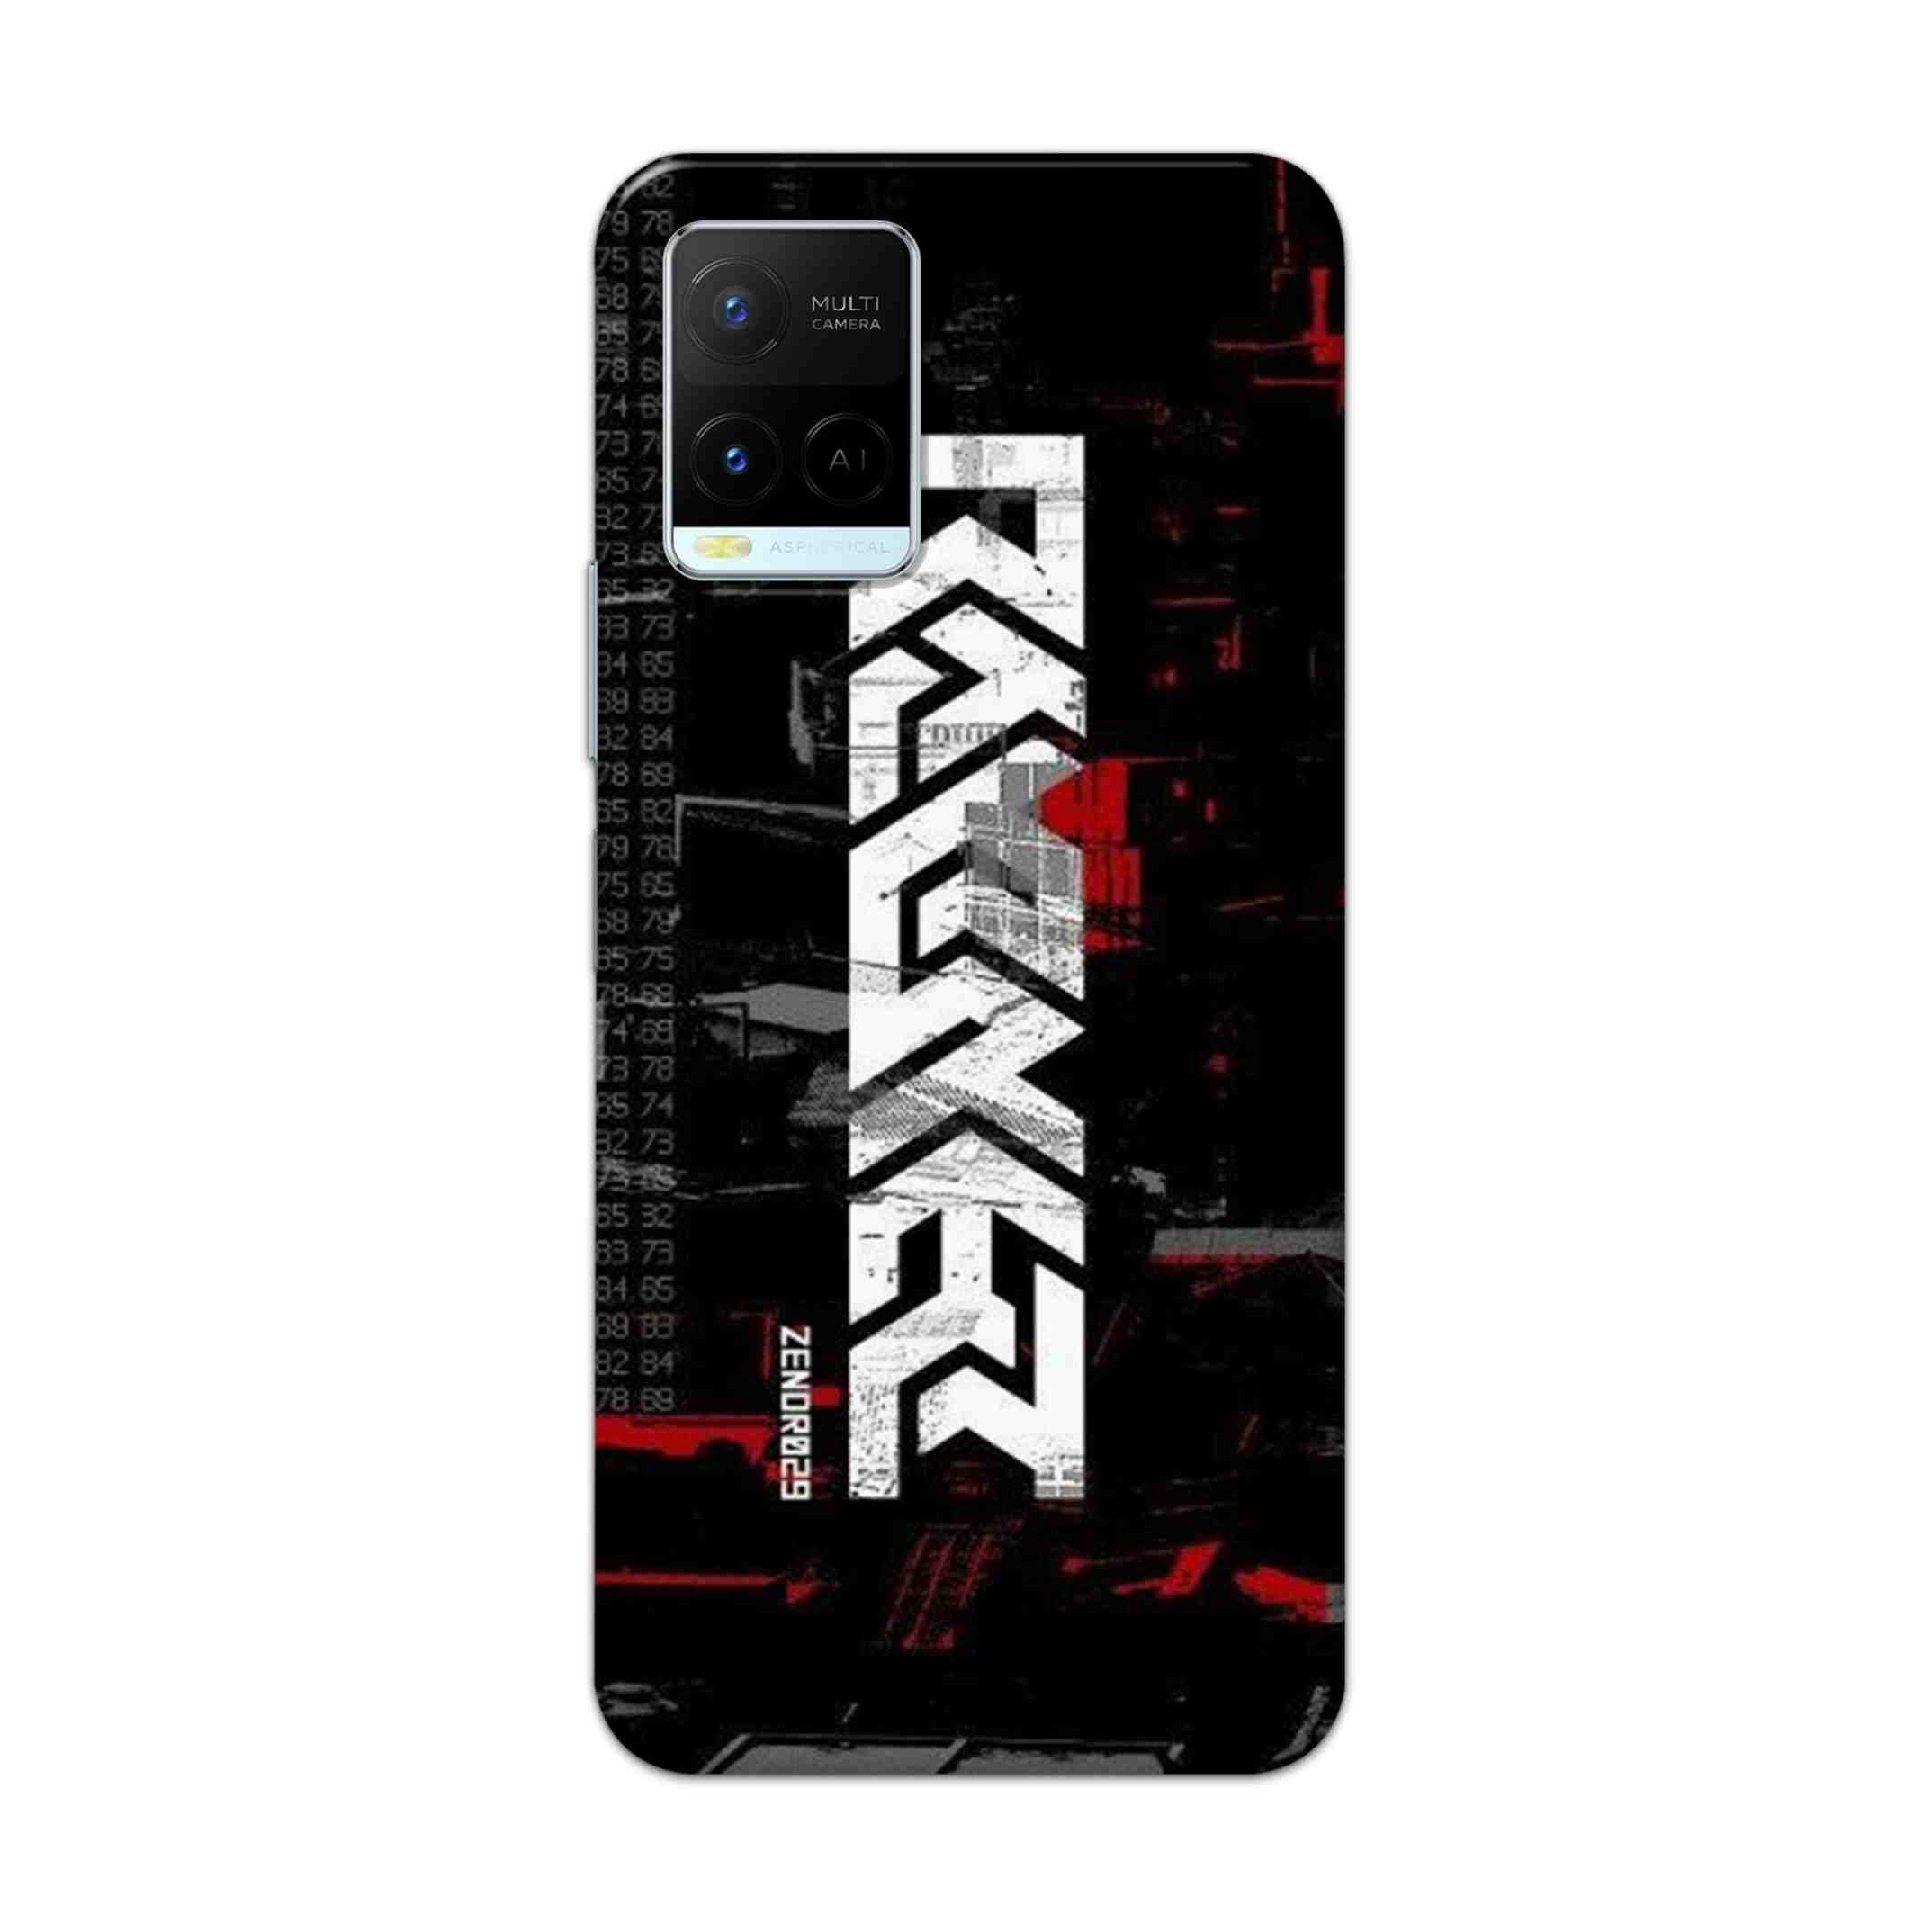 Buy Raxer Hard Back Mobile Phone Case Cover For Vivo Y21 2021 Online